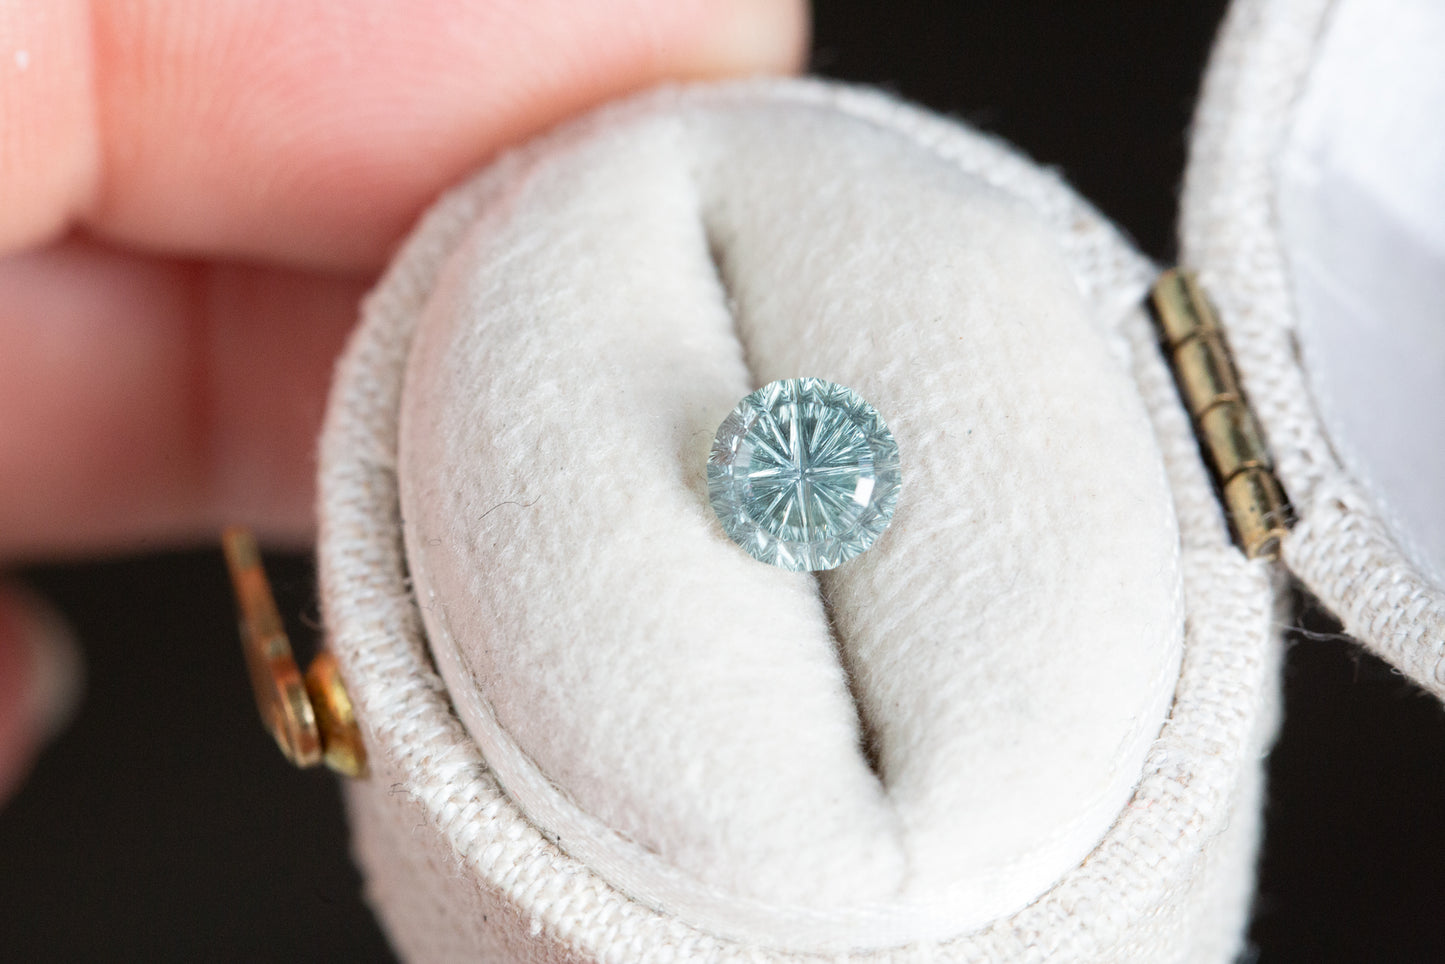 1.25ct round lighter teal sapphire - Starbrite cut by John Dyer